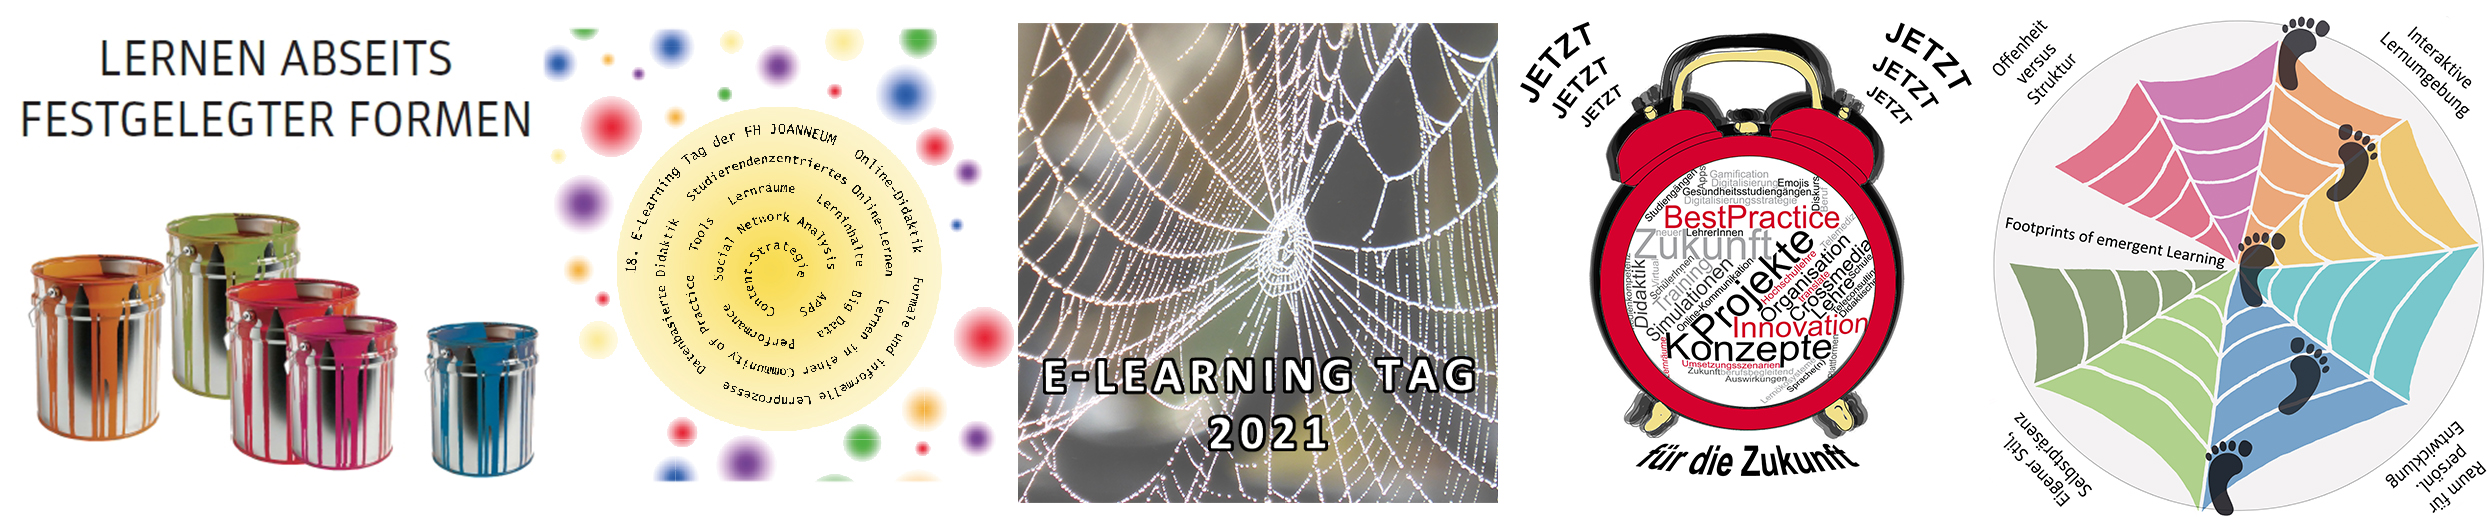 E-Learning Tag Logos_Titel